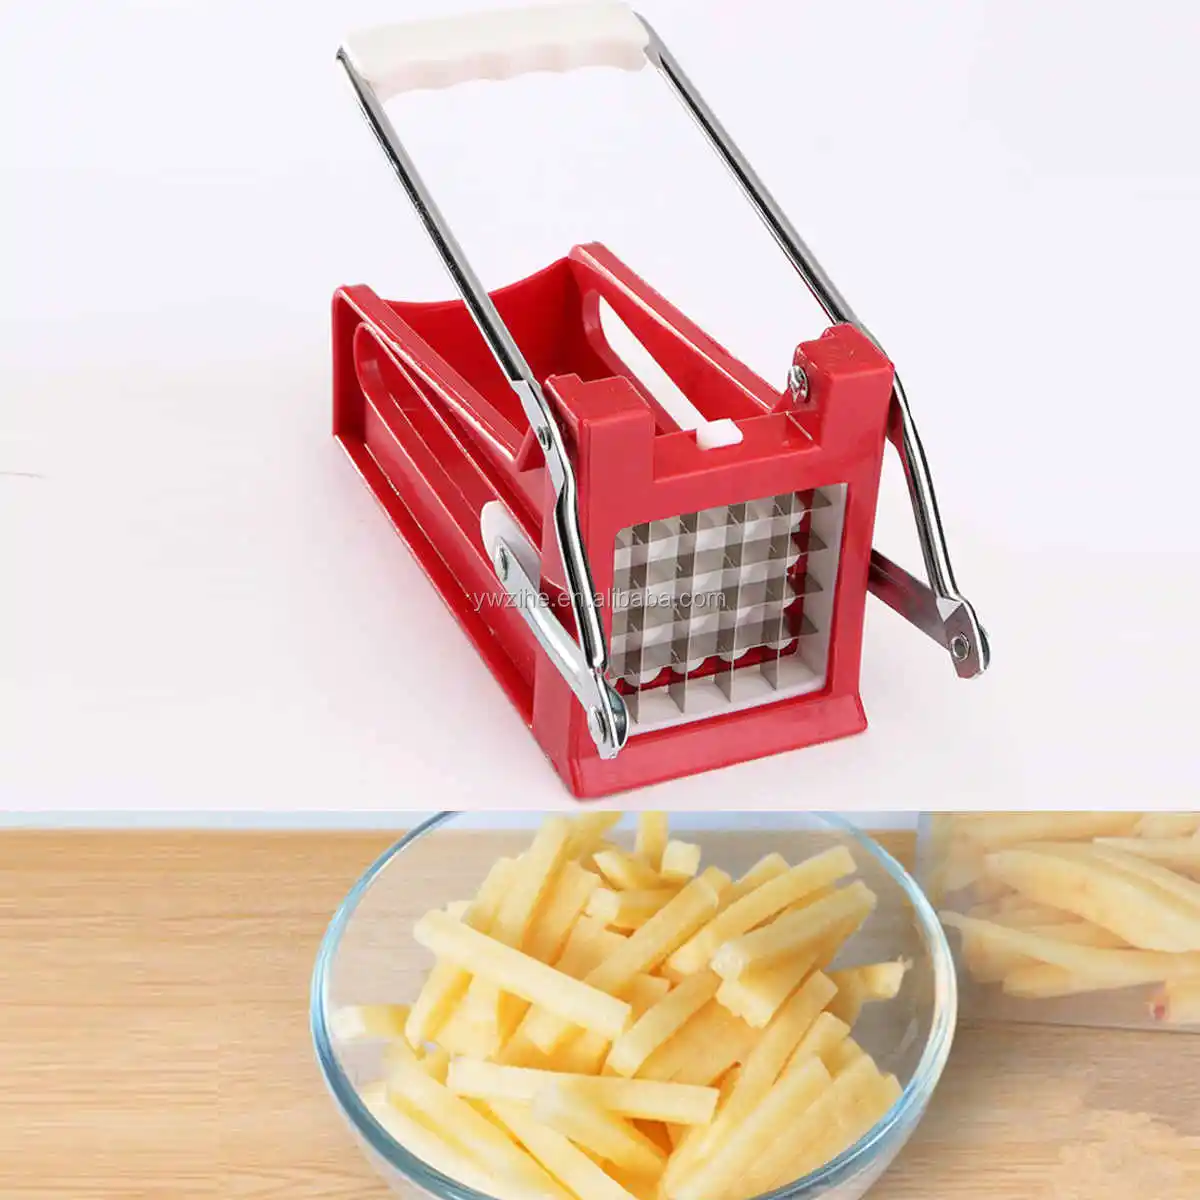 Potato Chipper French Fries Slicer Chip Cutter Chopper Maker Slicer + 2  Blades